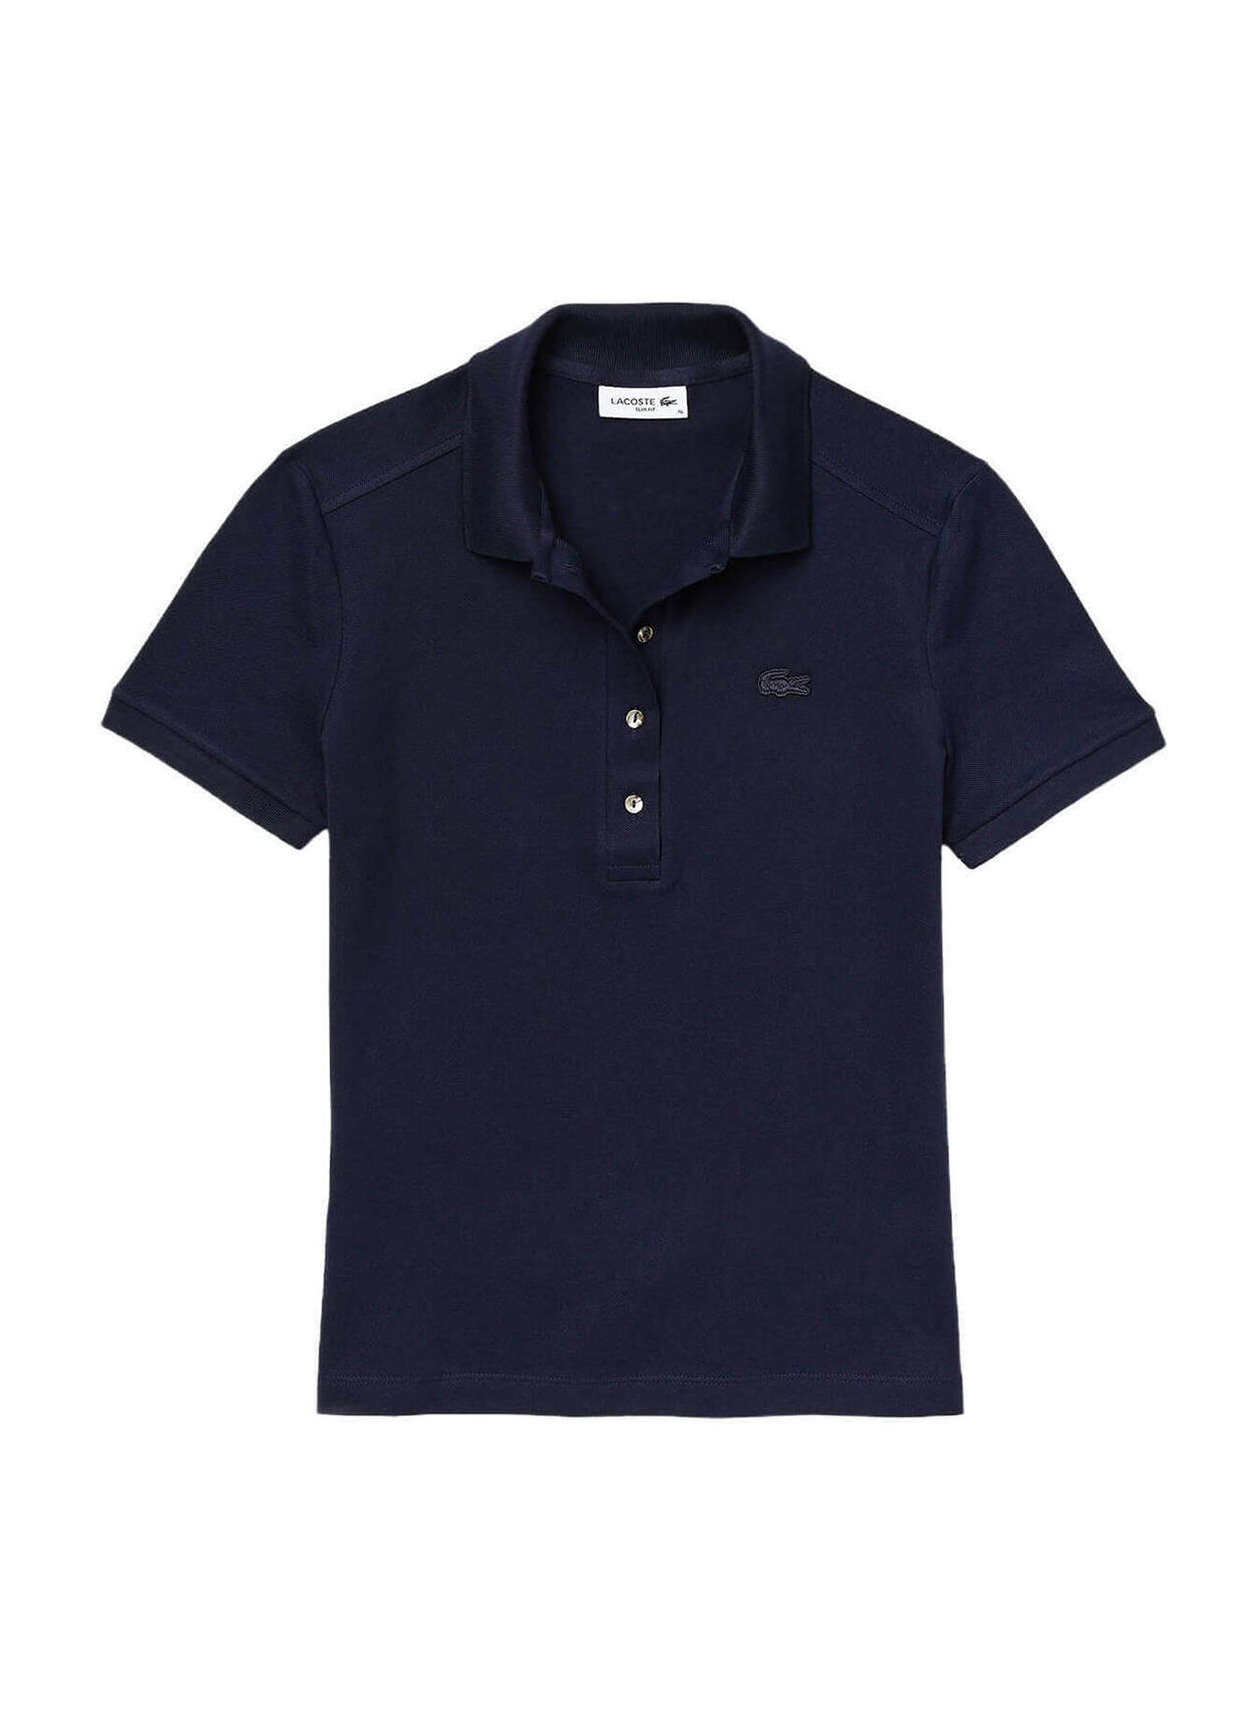 Lacoste Women's Navy Blue Stretch Cotton Pique Polo Custom Polo Shirts |